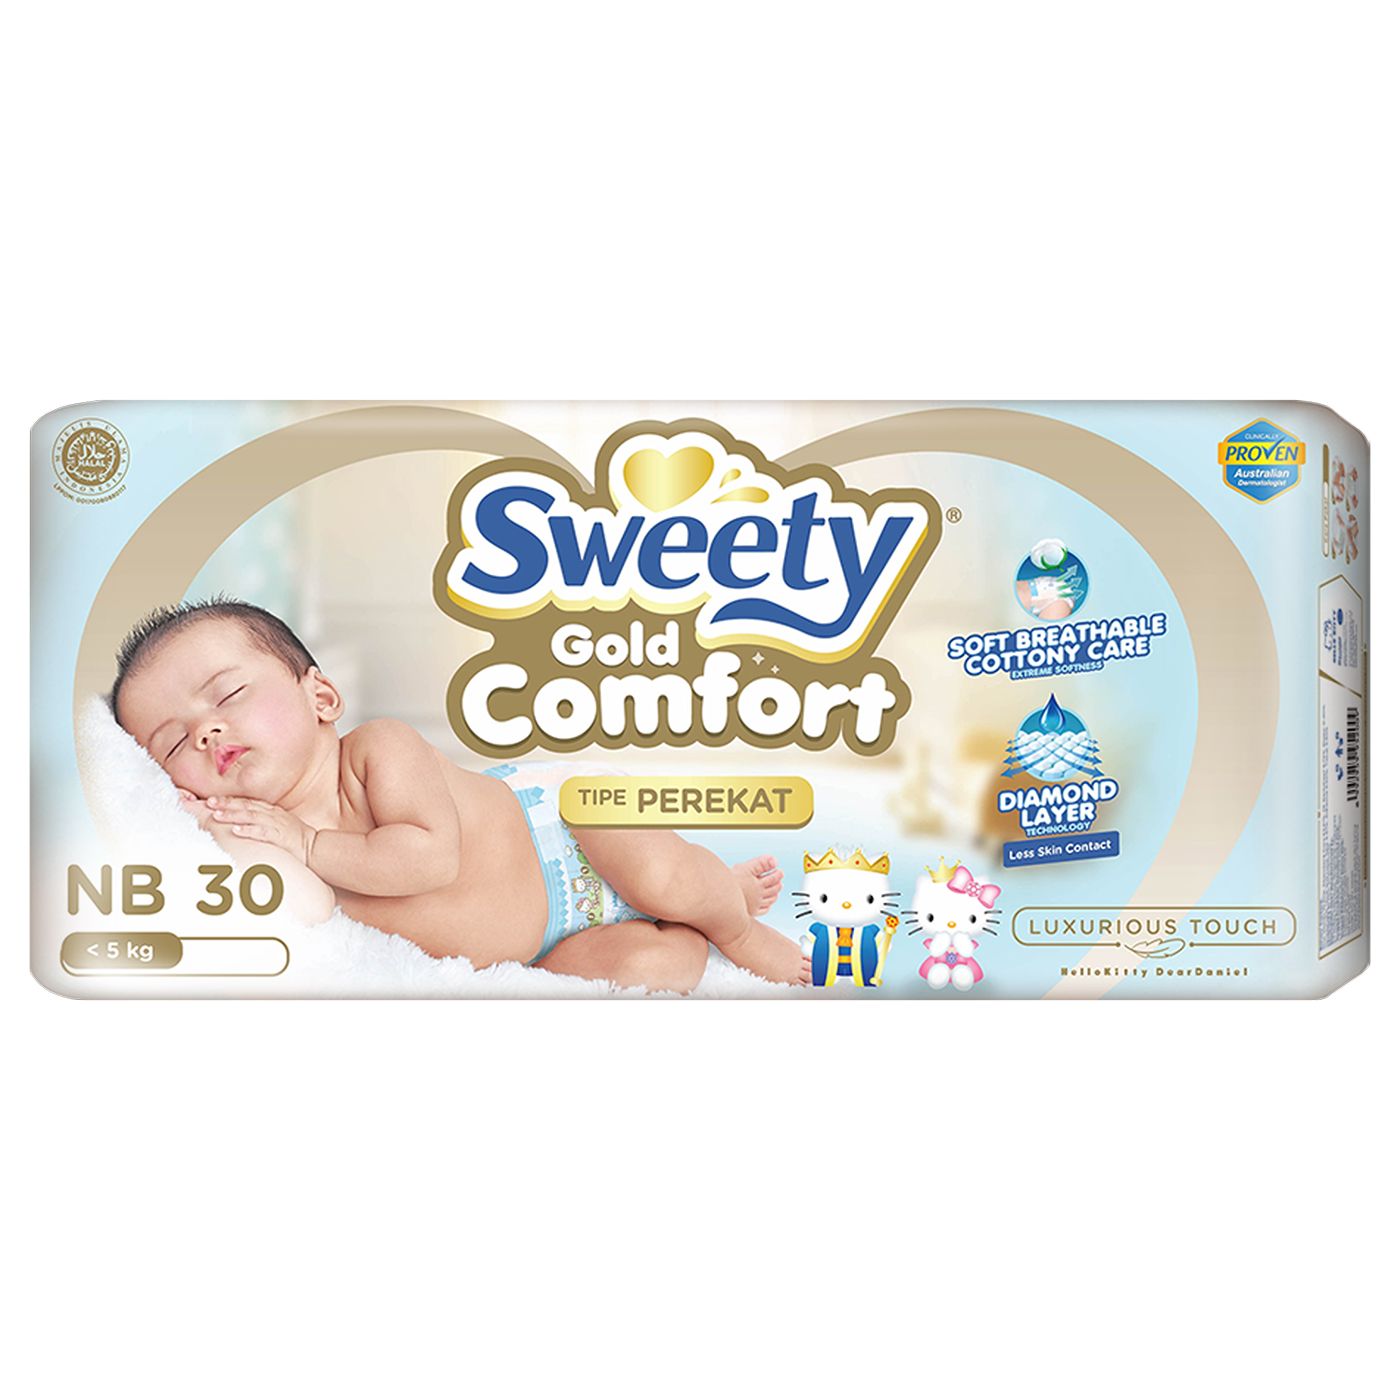 Sweety Comfort Gold NB 30 - 2